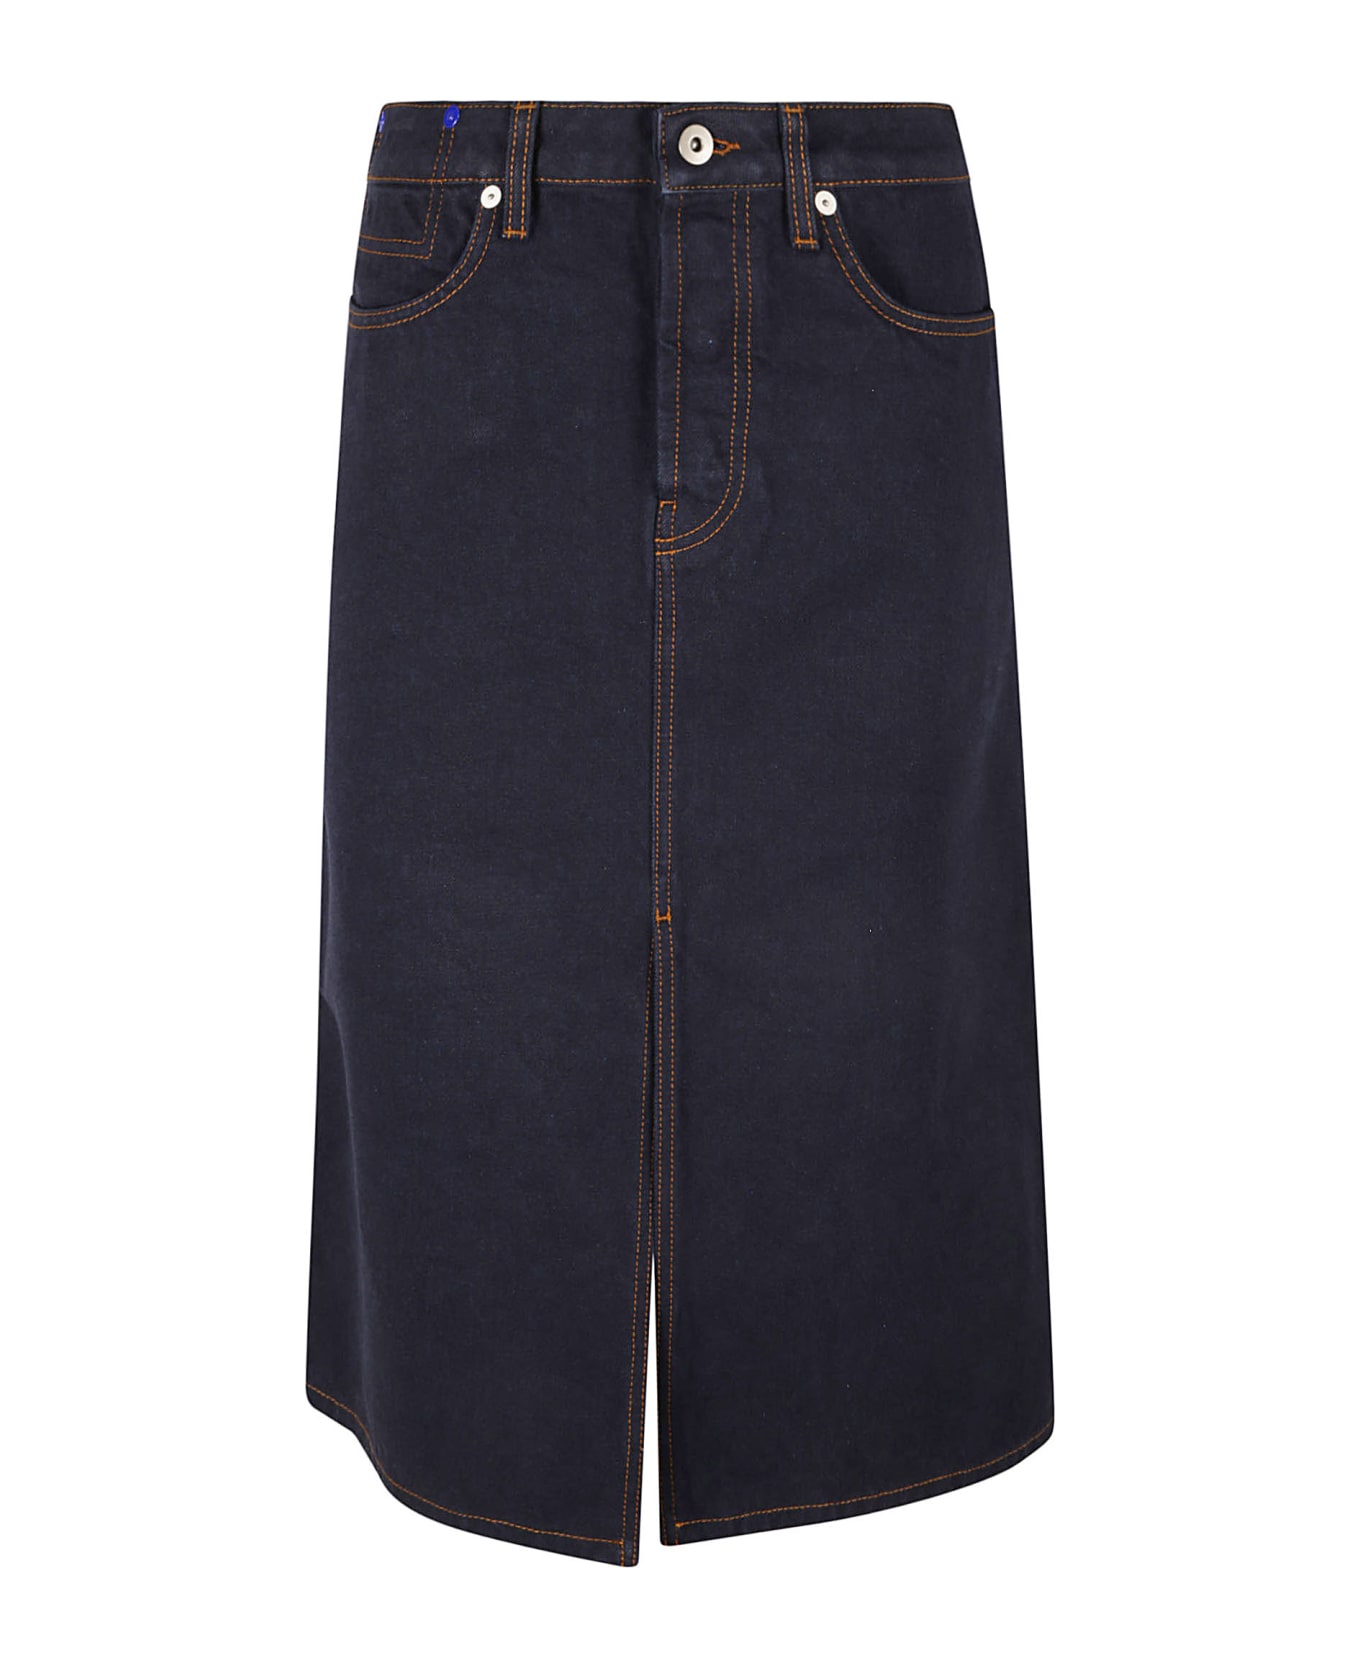 Burberry Denim Skirt - Indigo Blue スカート